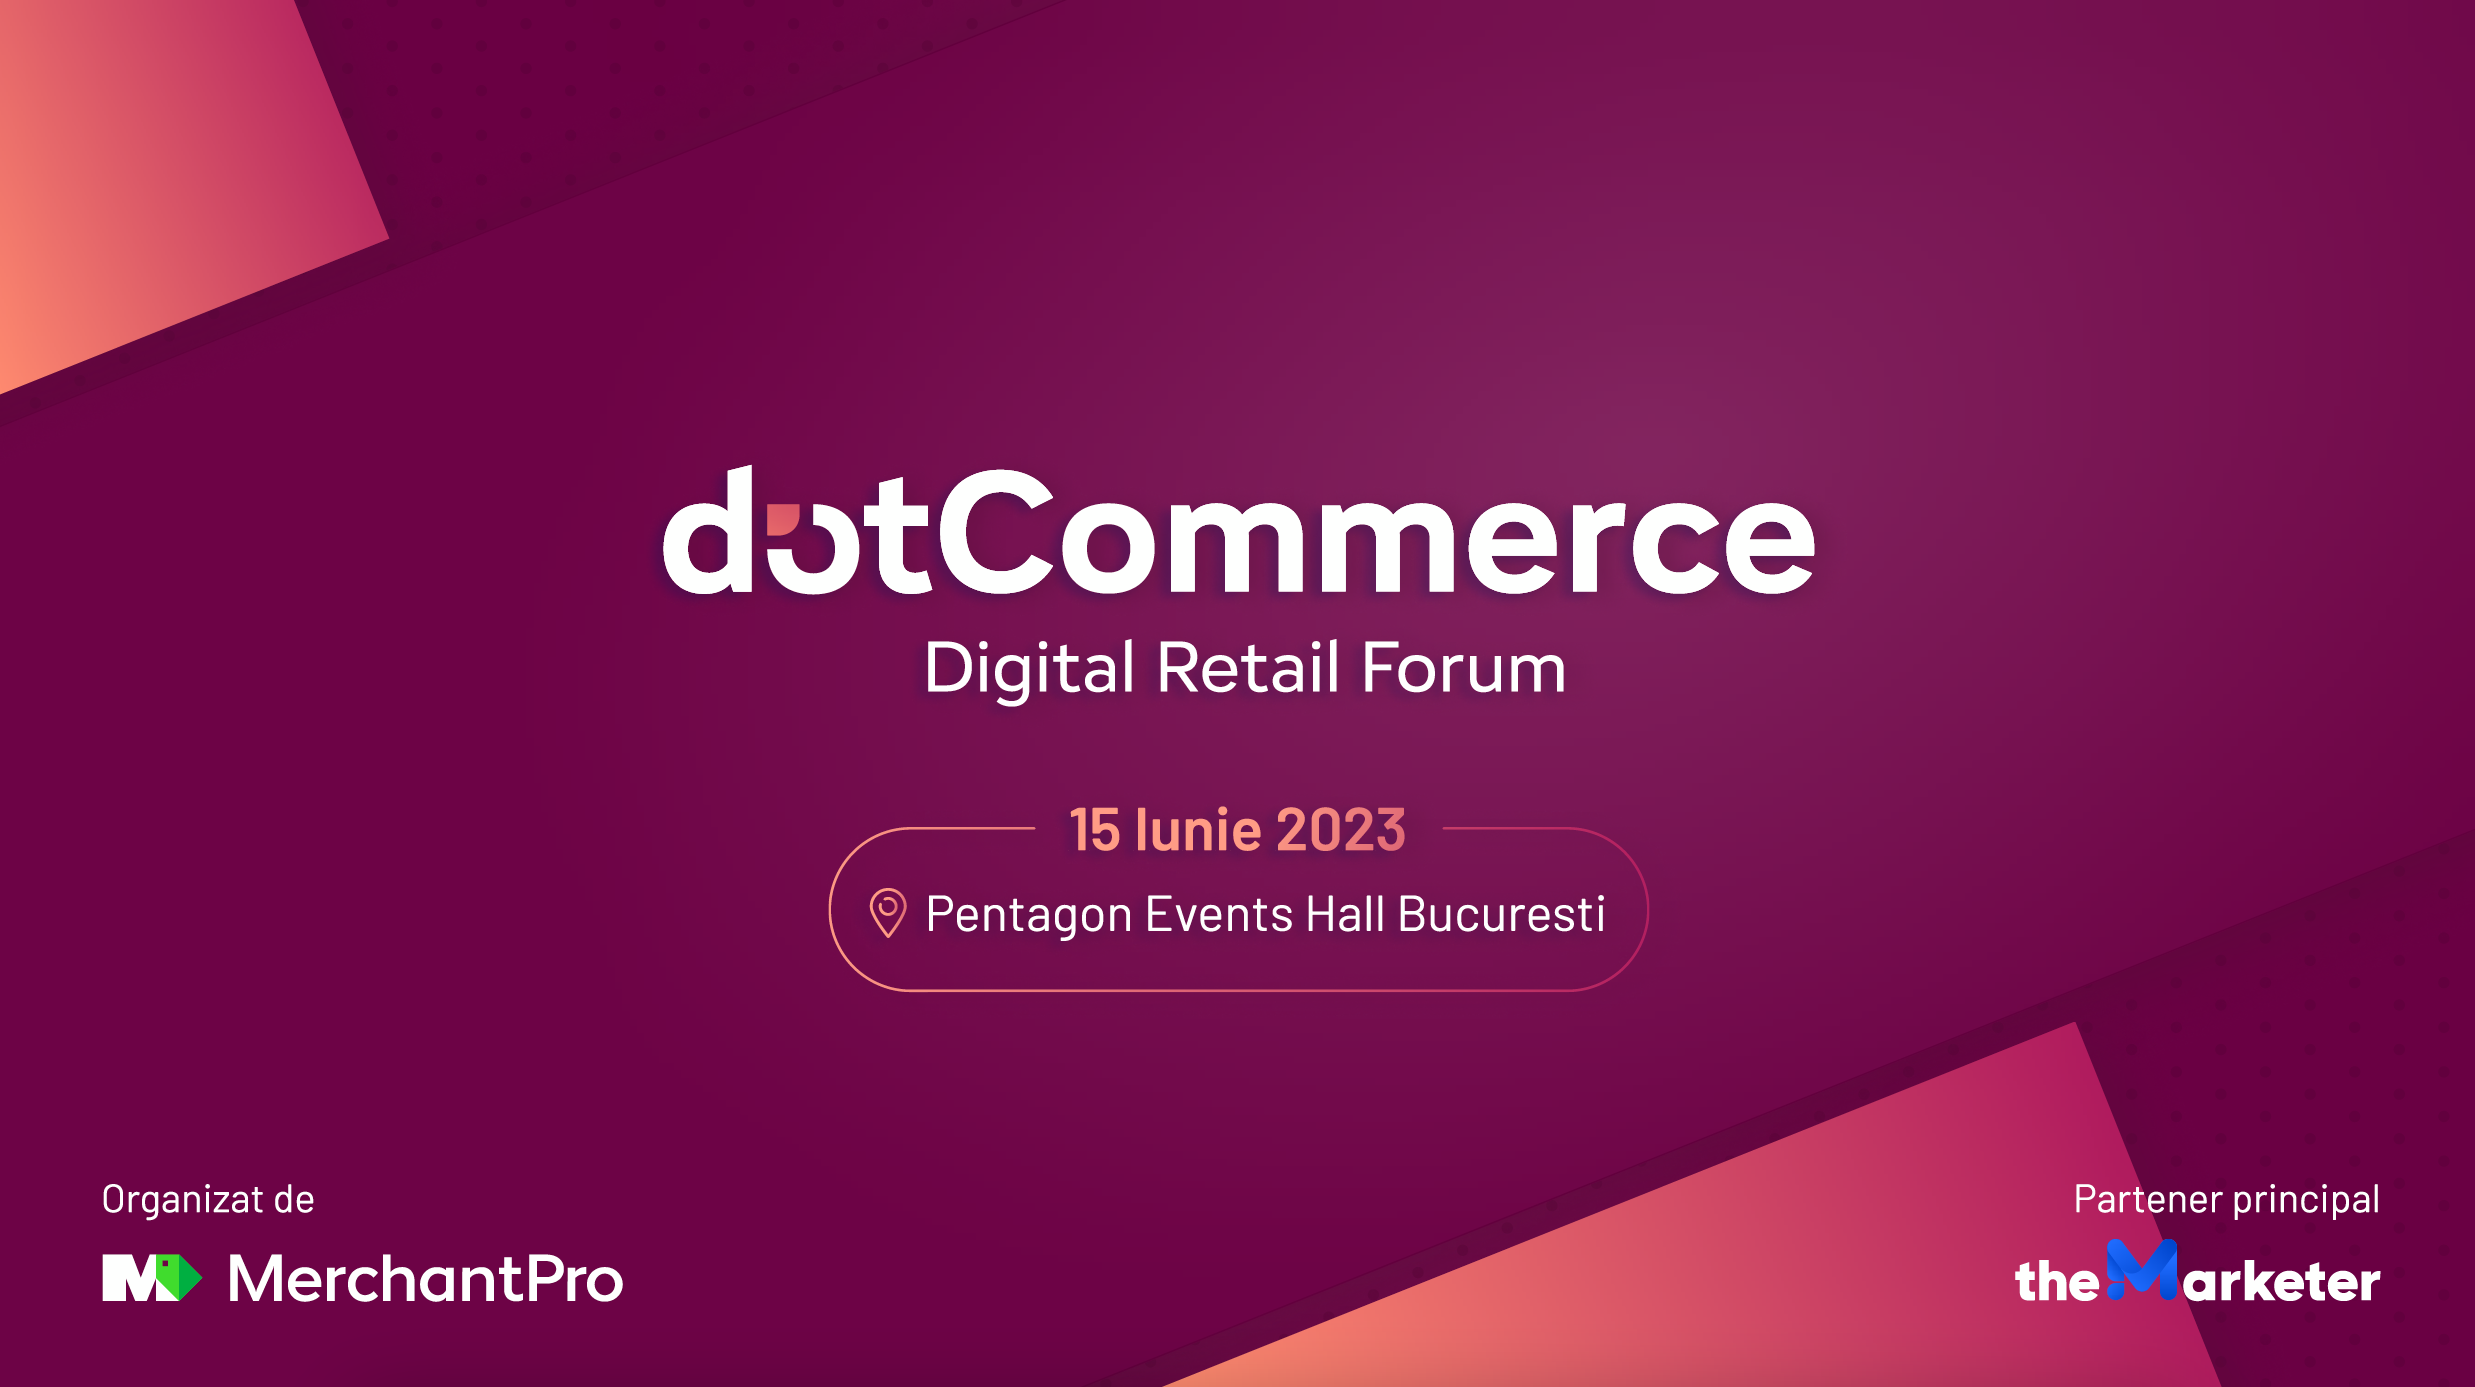 MerchantPro: Elita eCommerce-ului se reuneste la dotCommerce Digital Retail Forum, pe 15 iunie 2023